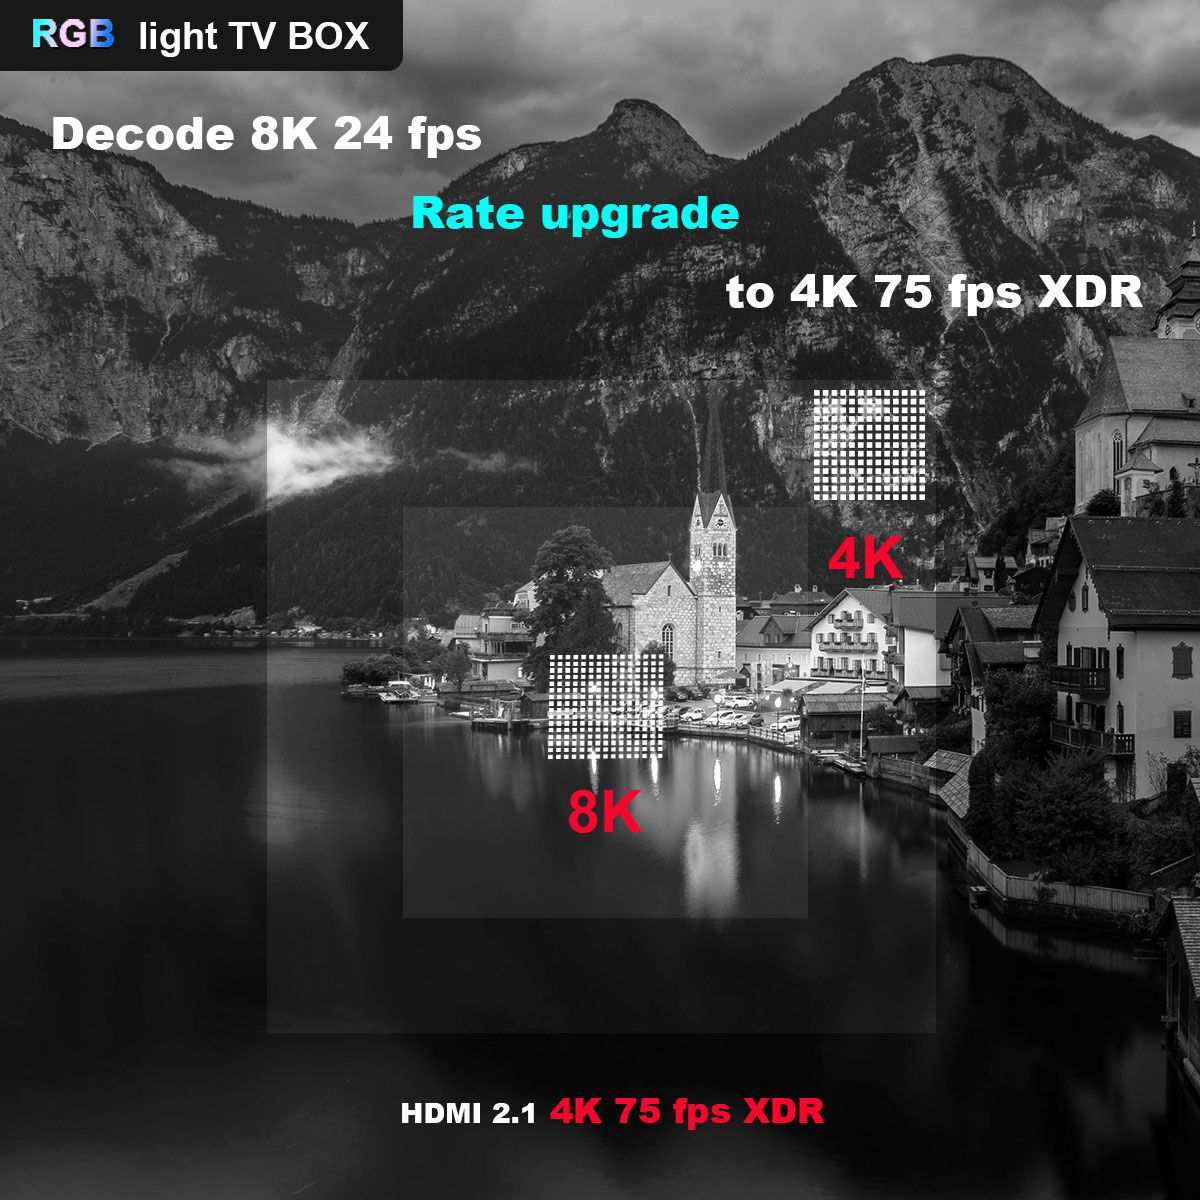 A95X-F3-Air-S905X3-4GB-RAM-32GB-ROM-5G-WIFI-bluetooth-40-Android-90-4K-8K-TV-Box-with-6-RGB-Light-1586916